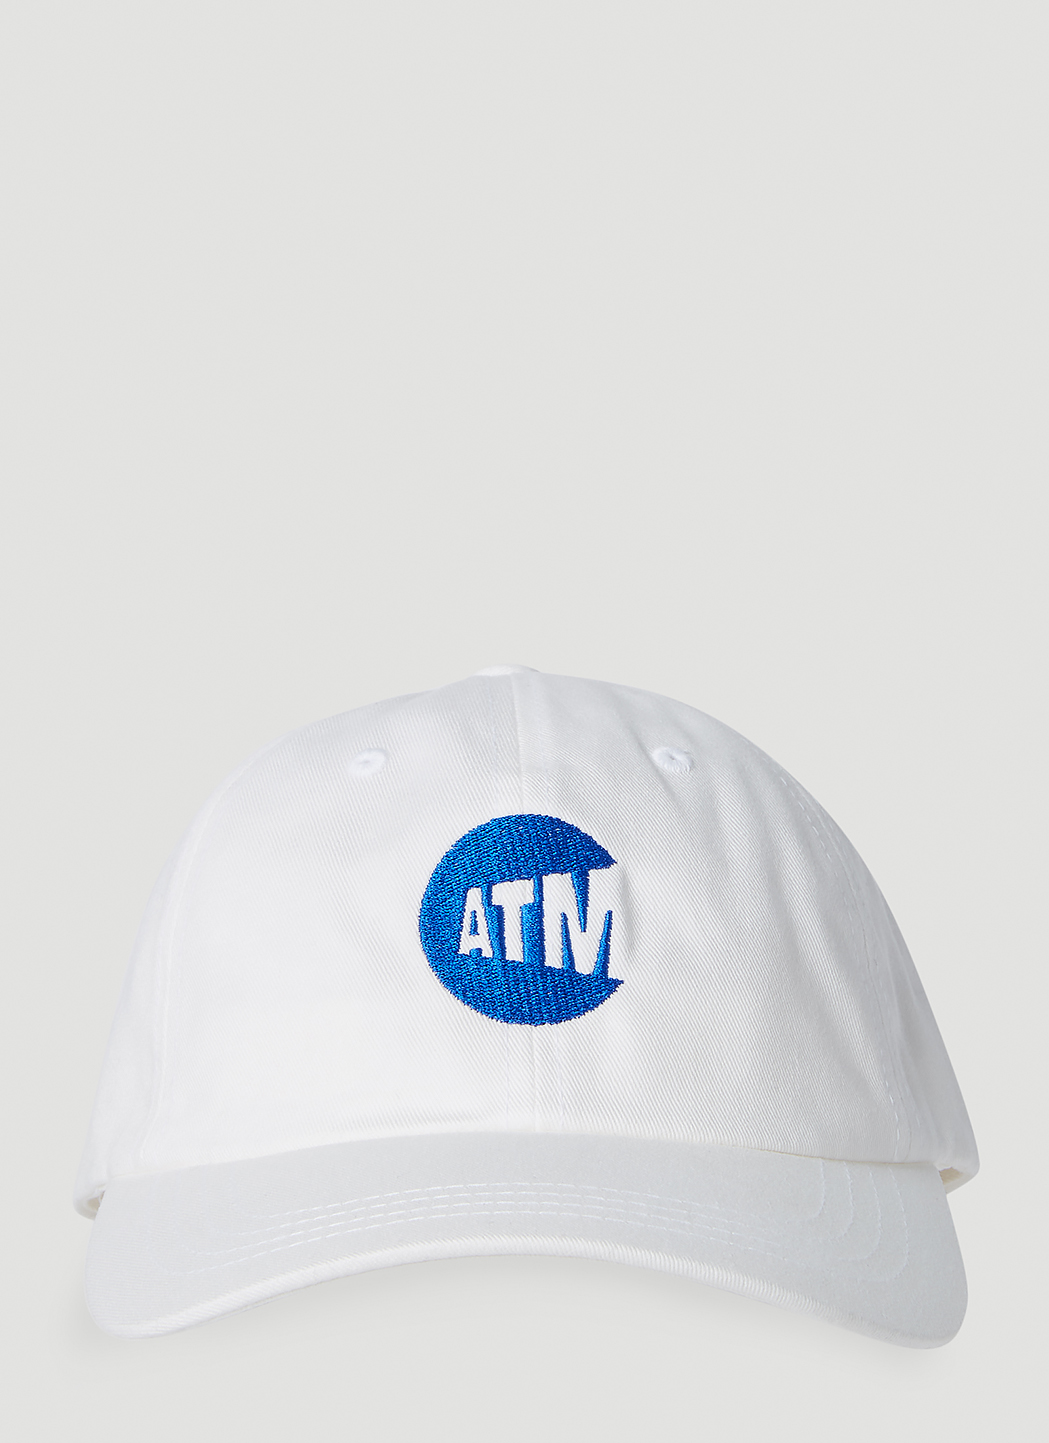 ATM Cash Only Baseball Cap